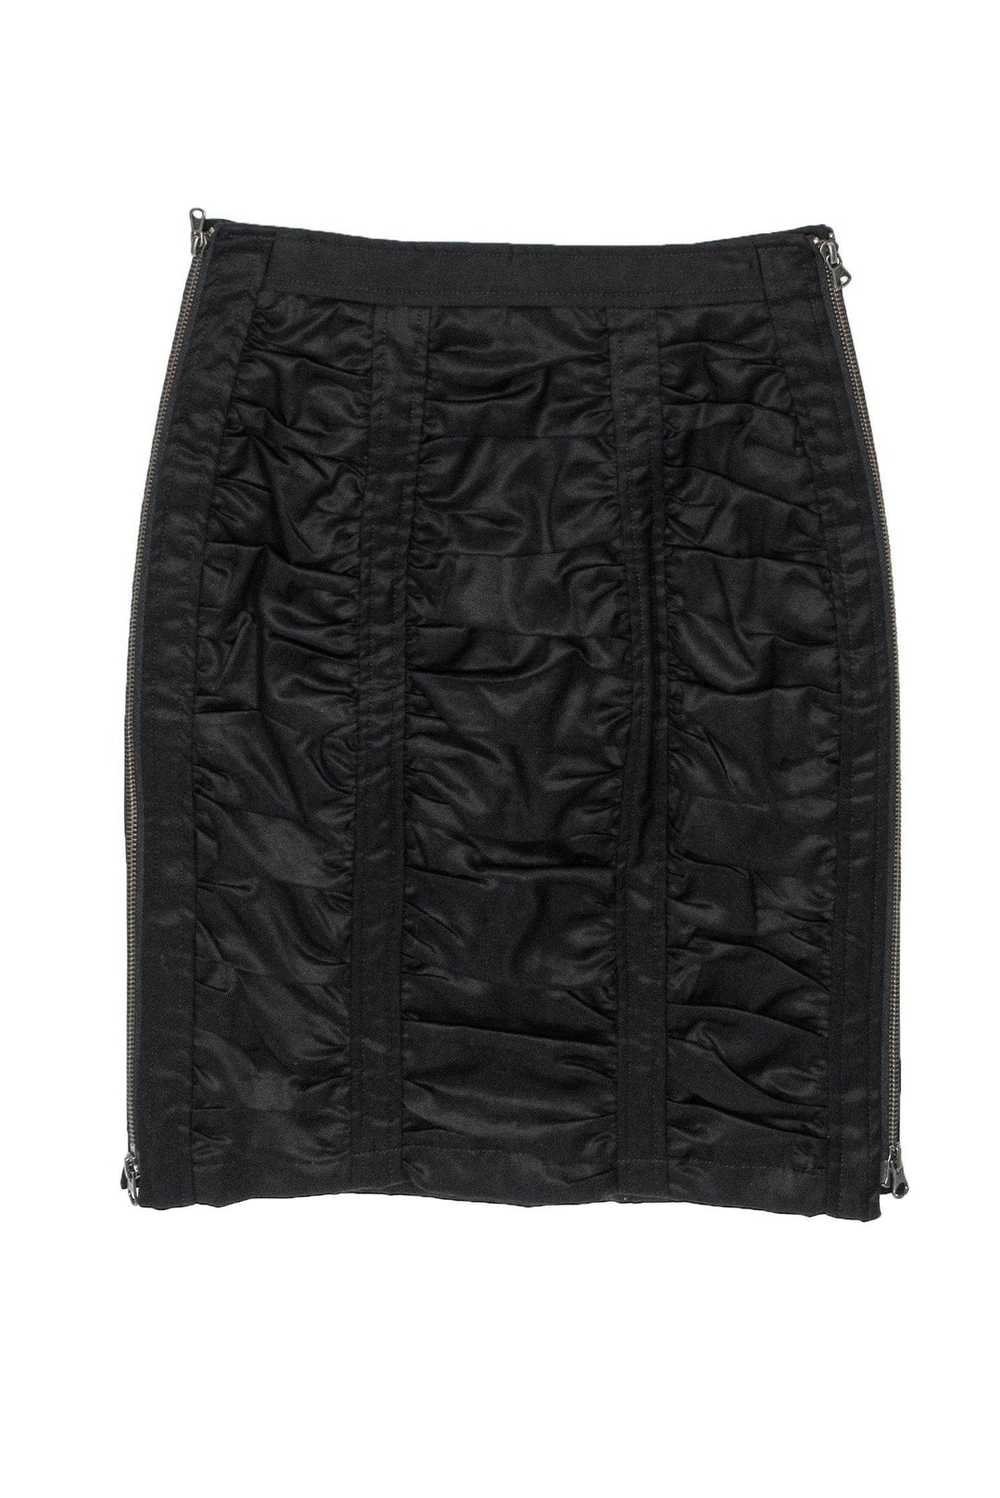 Nanette Lepore - Black Ruched Pencil Skirt w/ Dou… - image 2